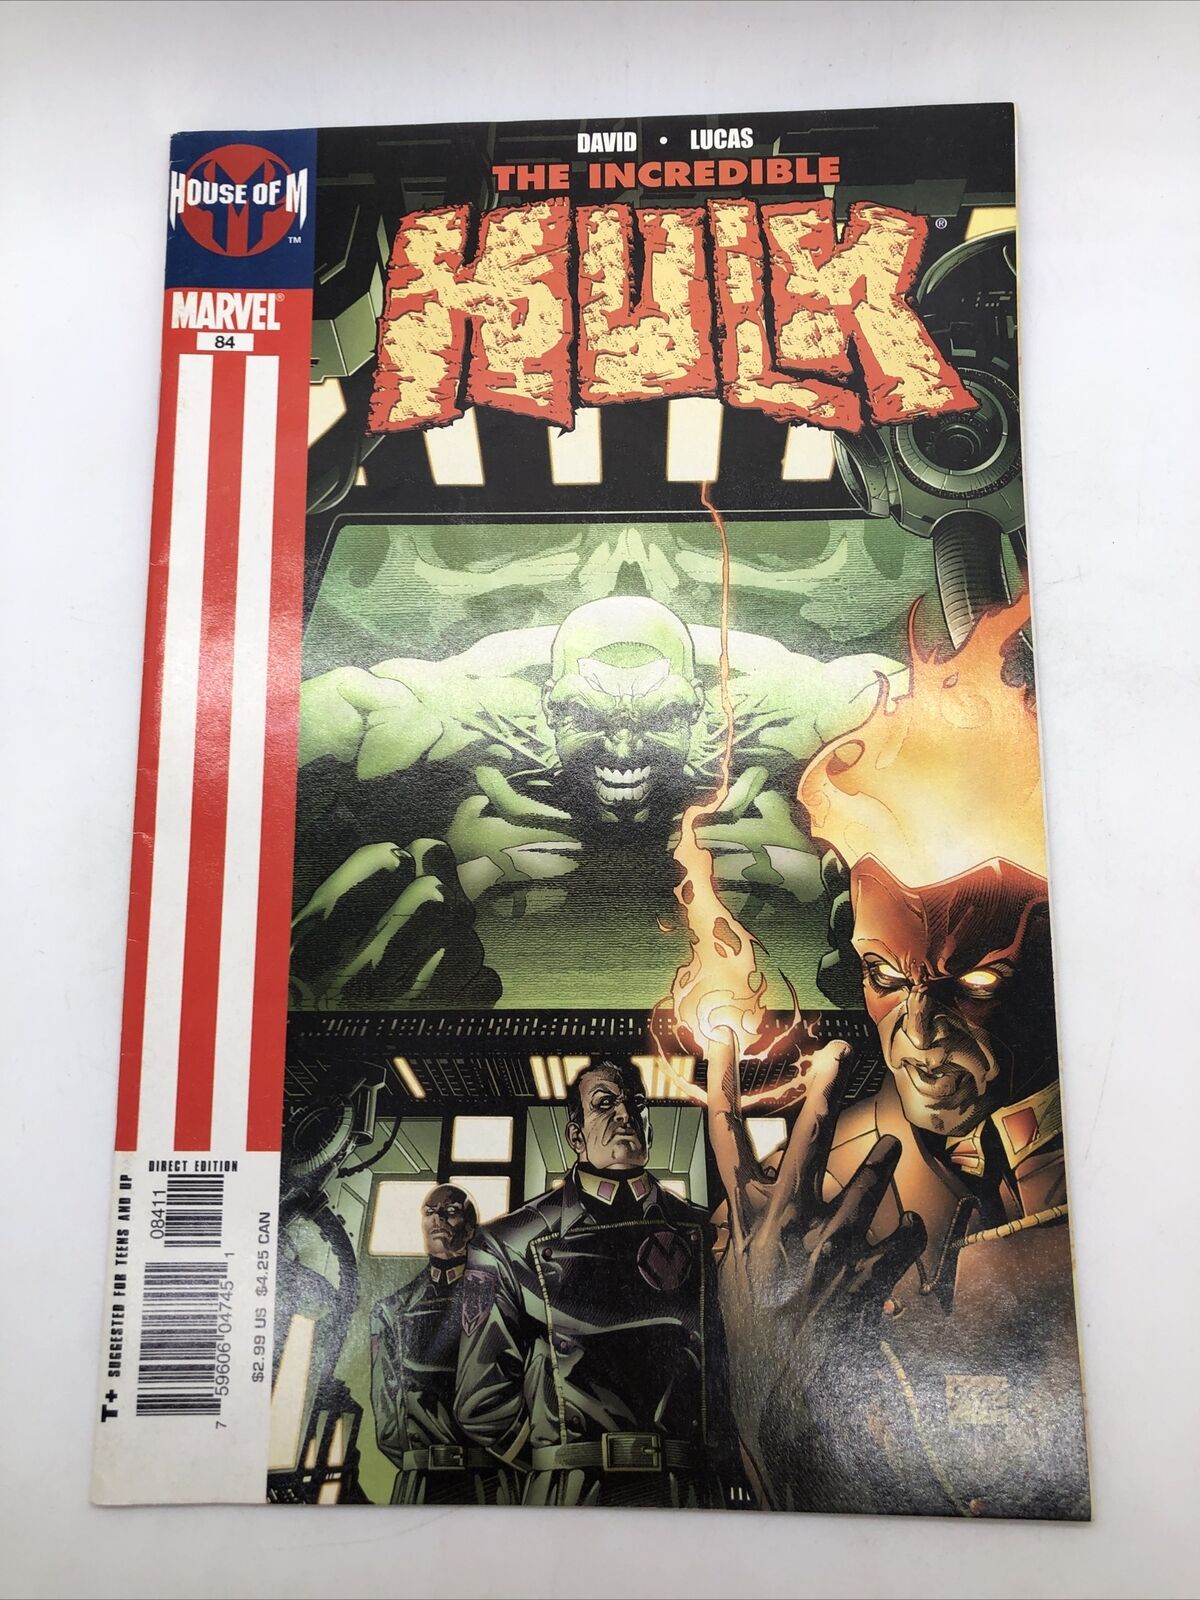 Incredible Hulk (1999 - 2nd Series) #84 - Marvel Comics